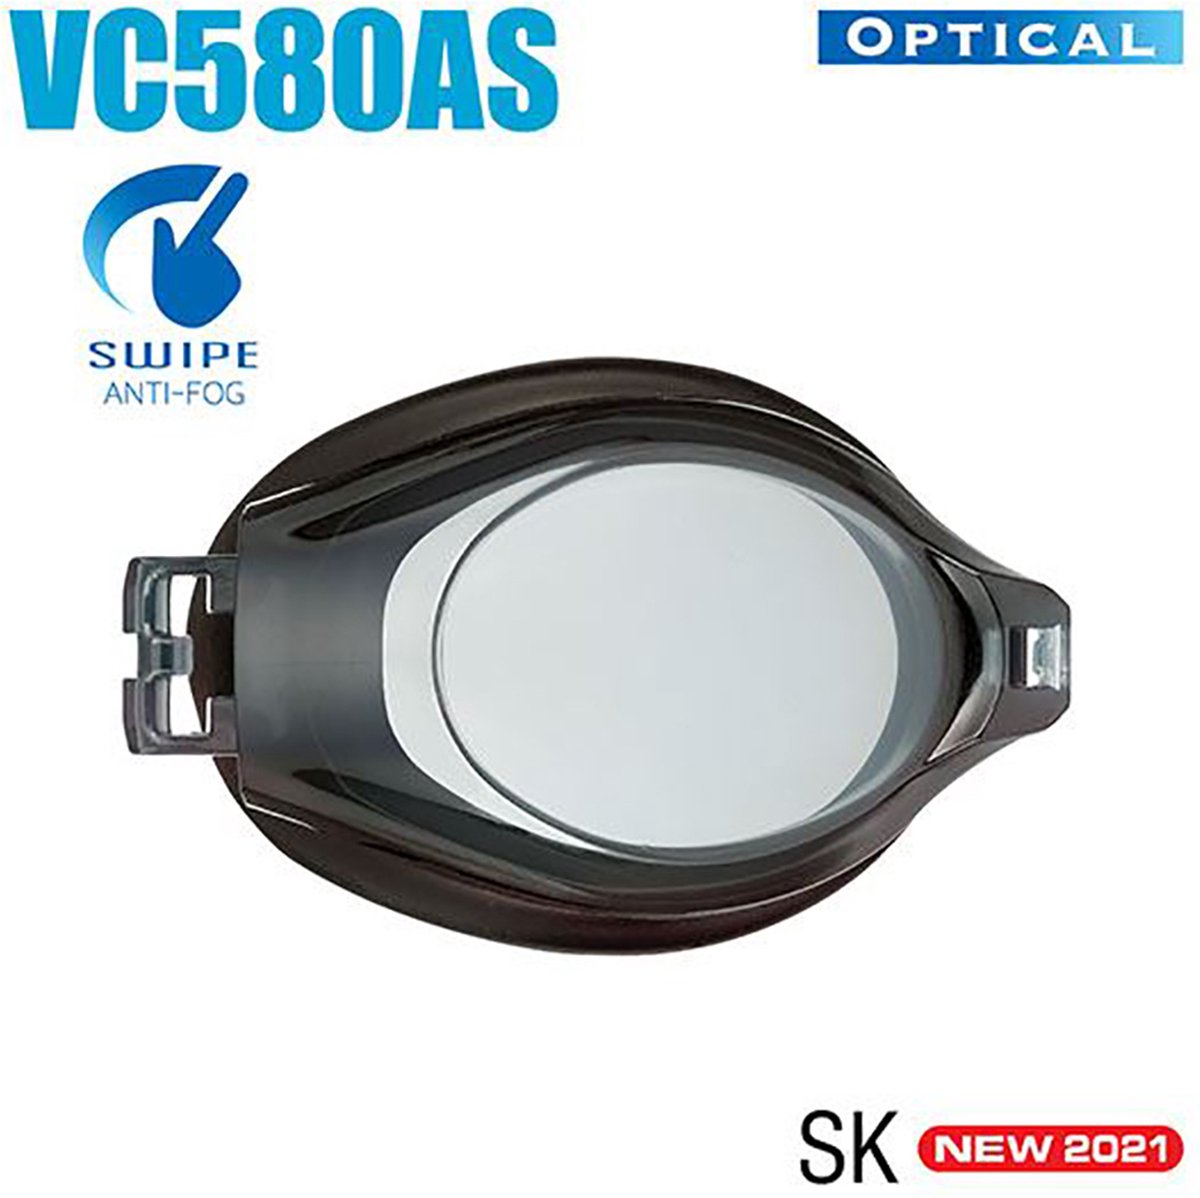 VIEW zwembril lens met SWIPE technologie VC580AS Sterkte +1.5 kleur zwart